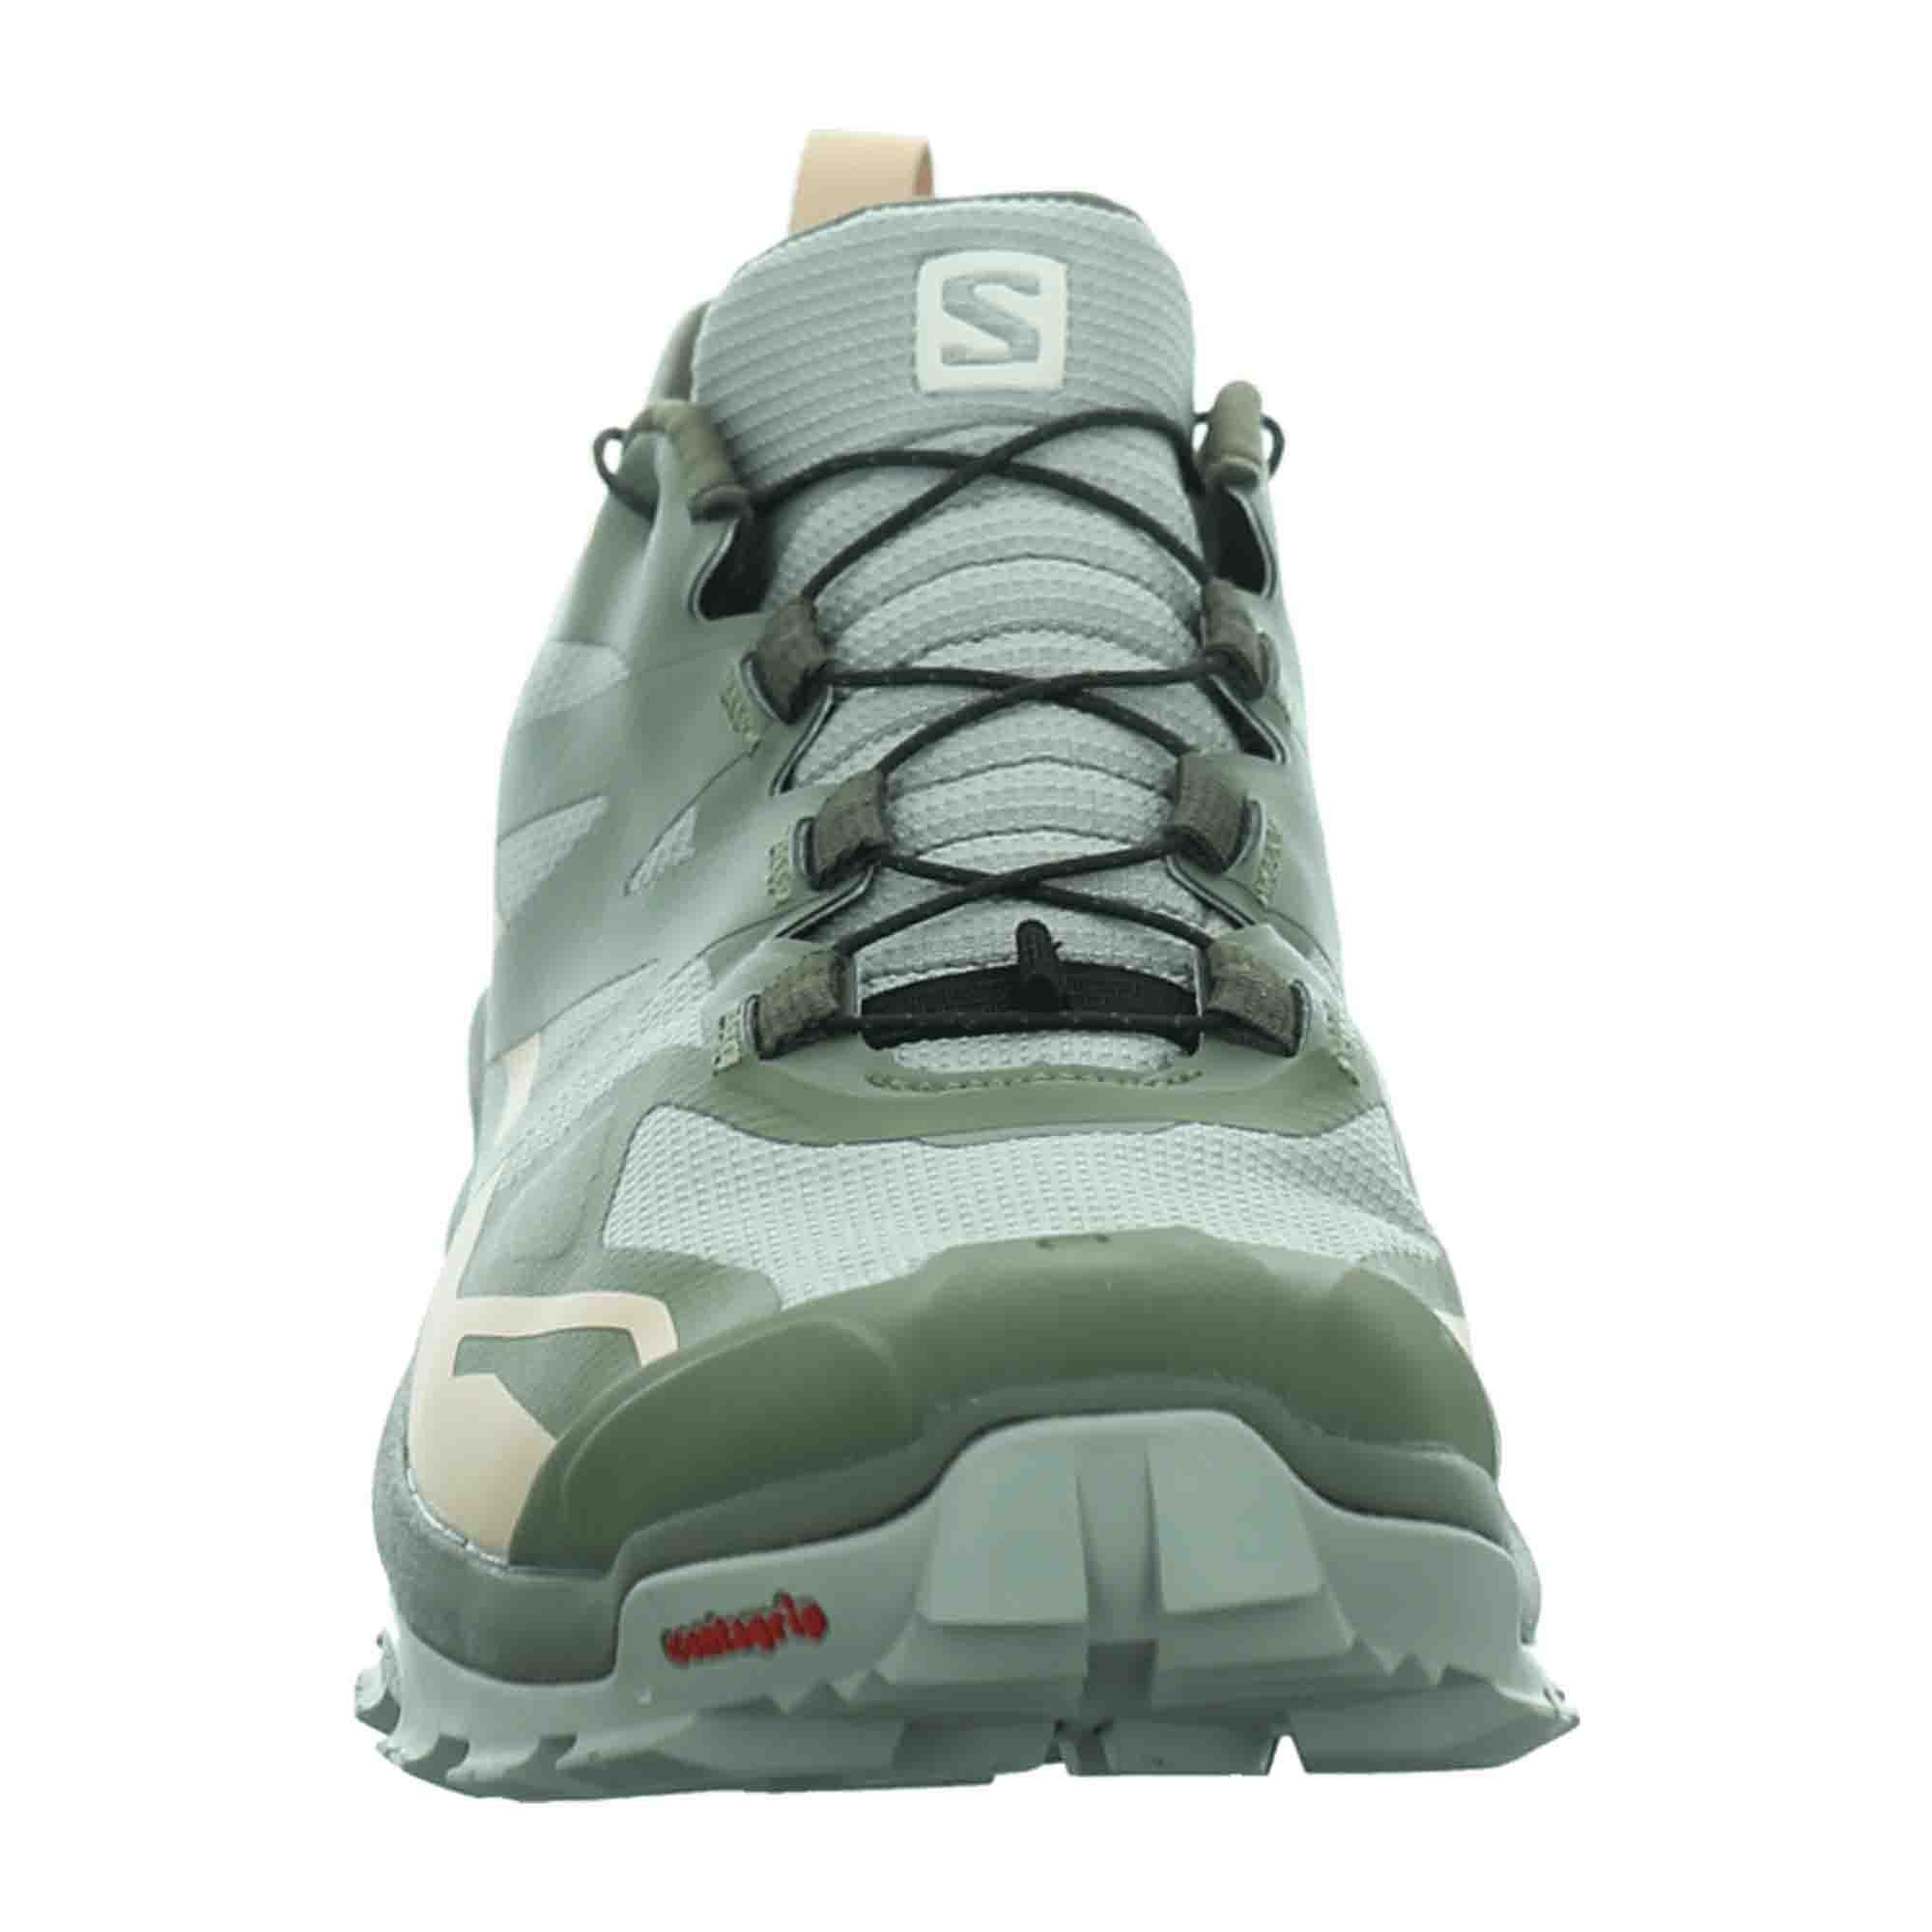 Salomon shoes XA ROGG 2 GTX W Wrought for women, gray